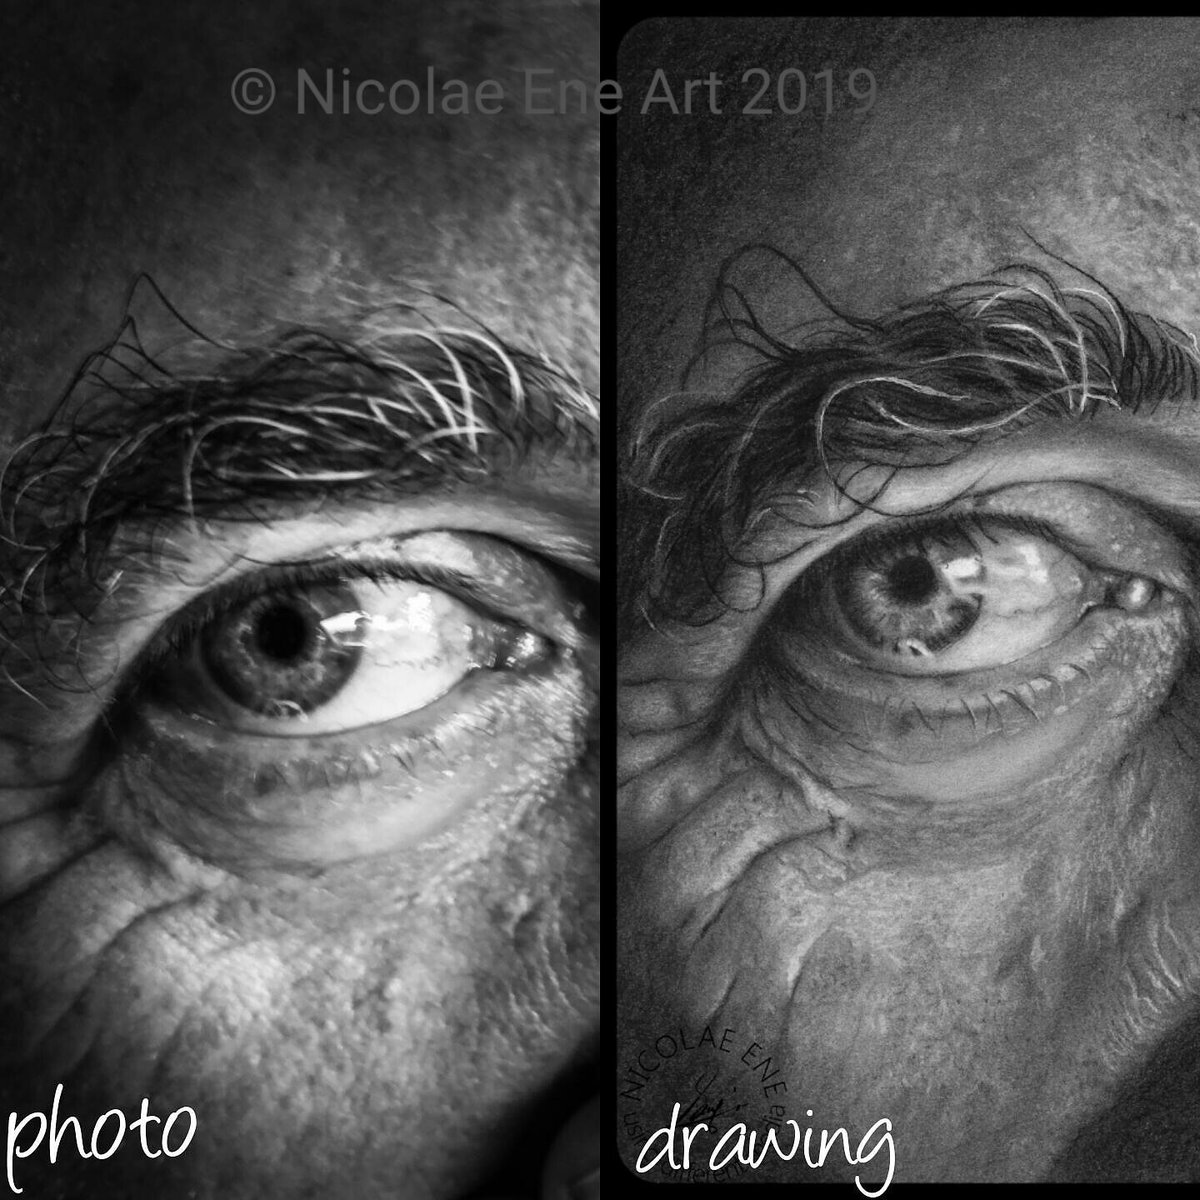 Drawing/photo comparison
#eye #eyeshadowspalette #eyeshadow #realism #realismart #hyperrealism #iris #brows #browshape #portrait #art #graphitedrawing #charcoaldrawing #niceartwork #artlovers #eyedrawing #instaart #blackandwhite #pencildrawing